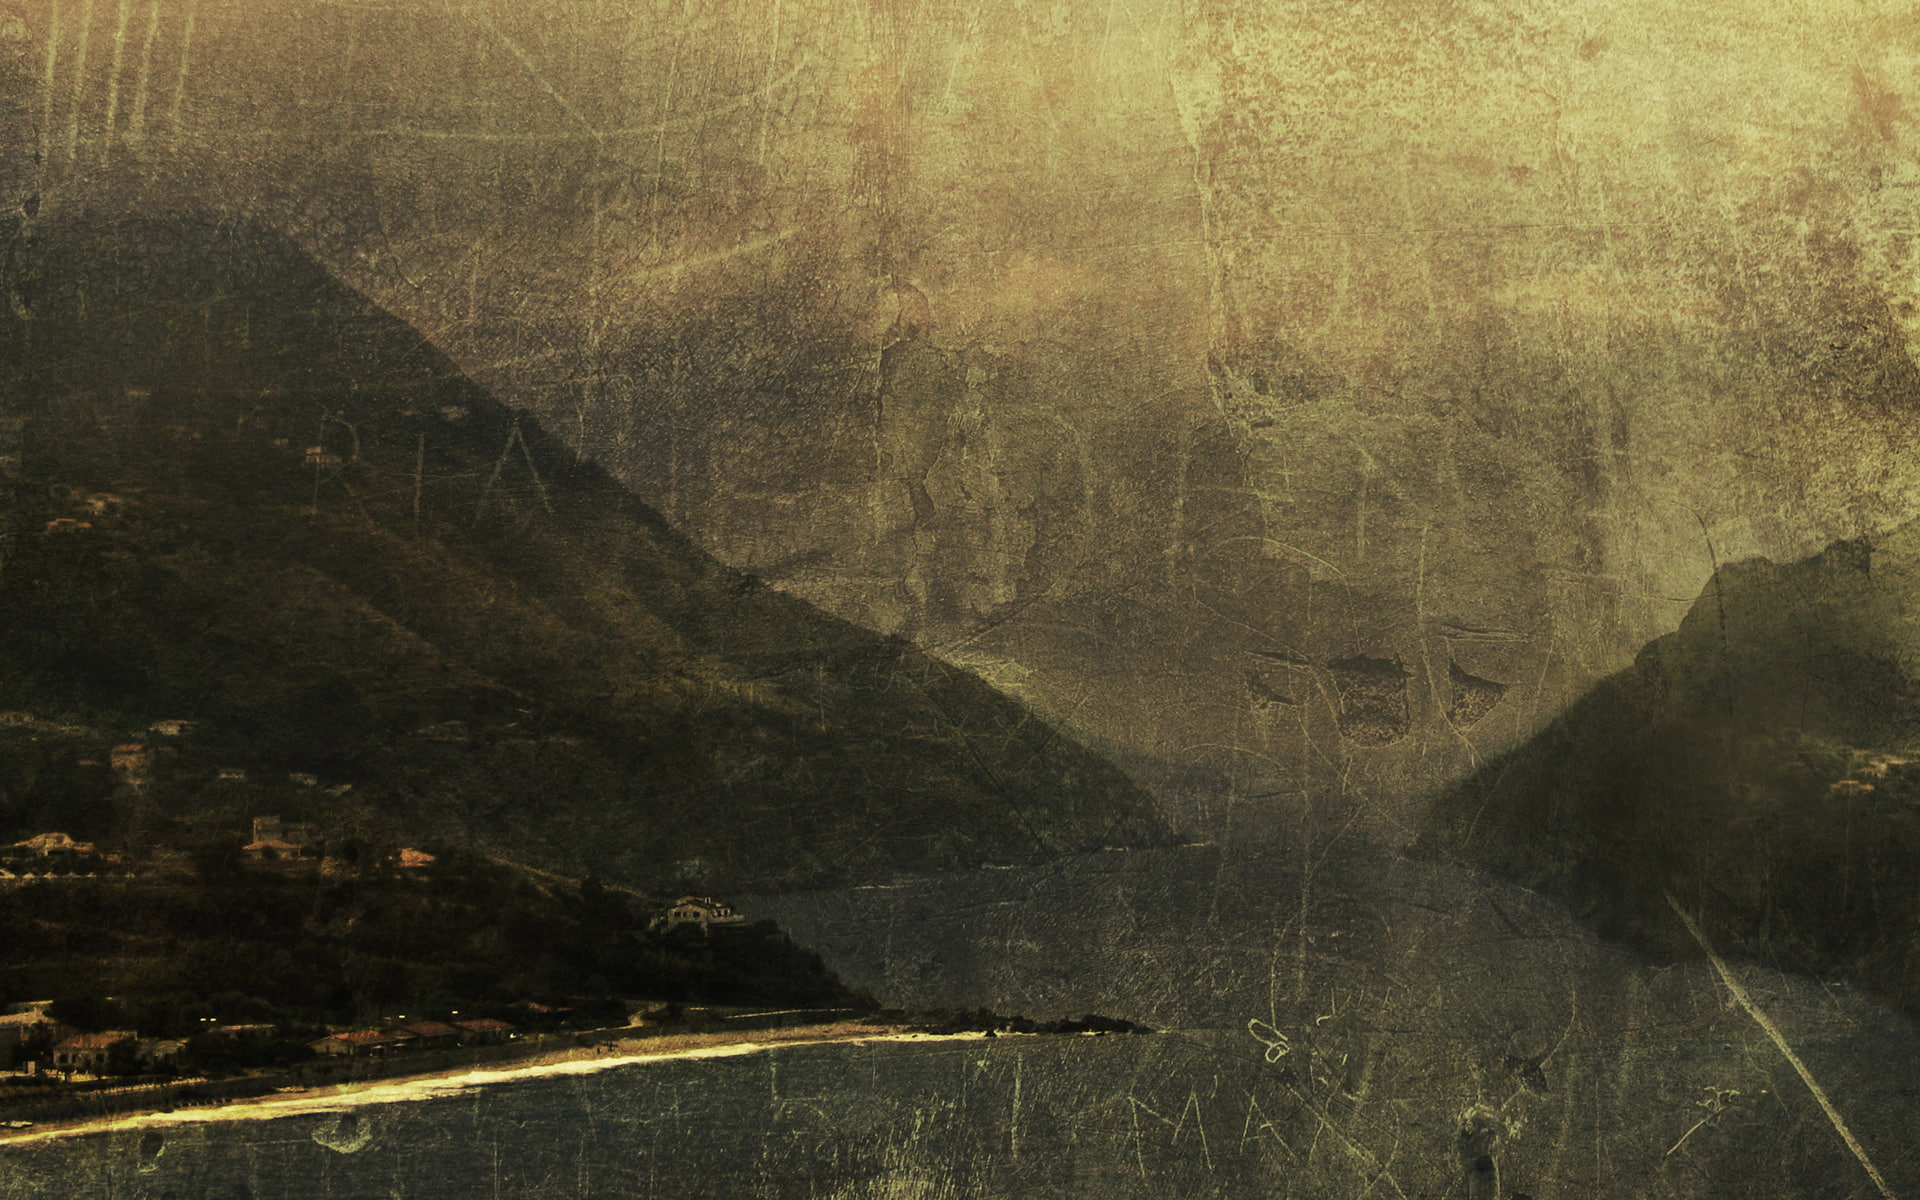 Landscape HD, sephia photo of body of water between islands, digital/artwork